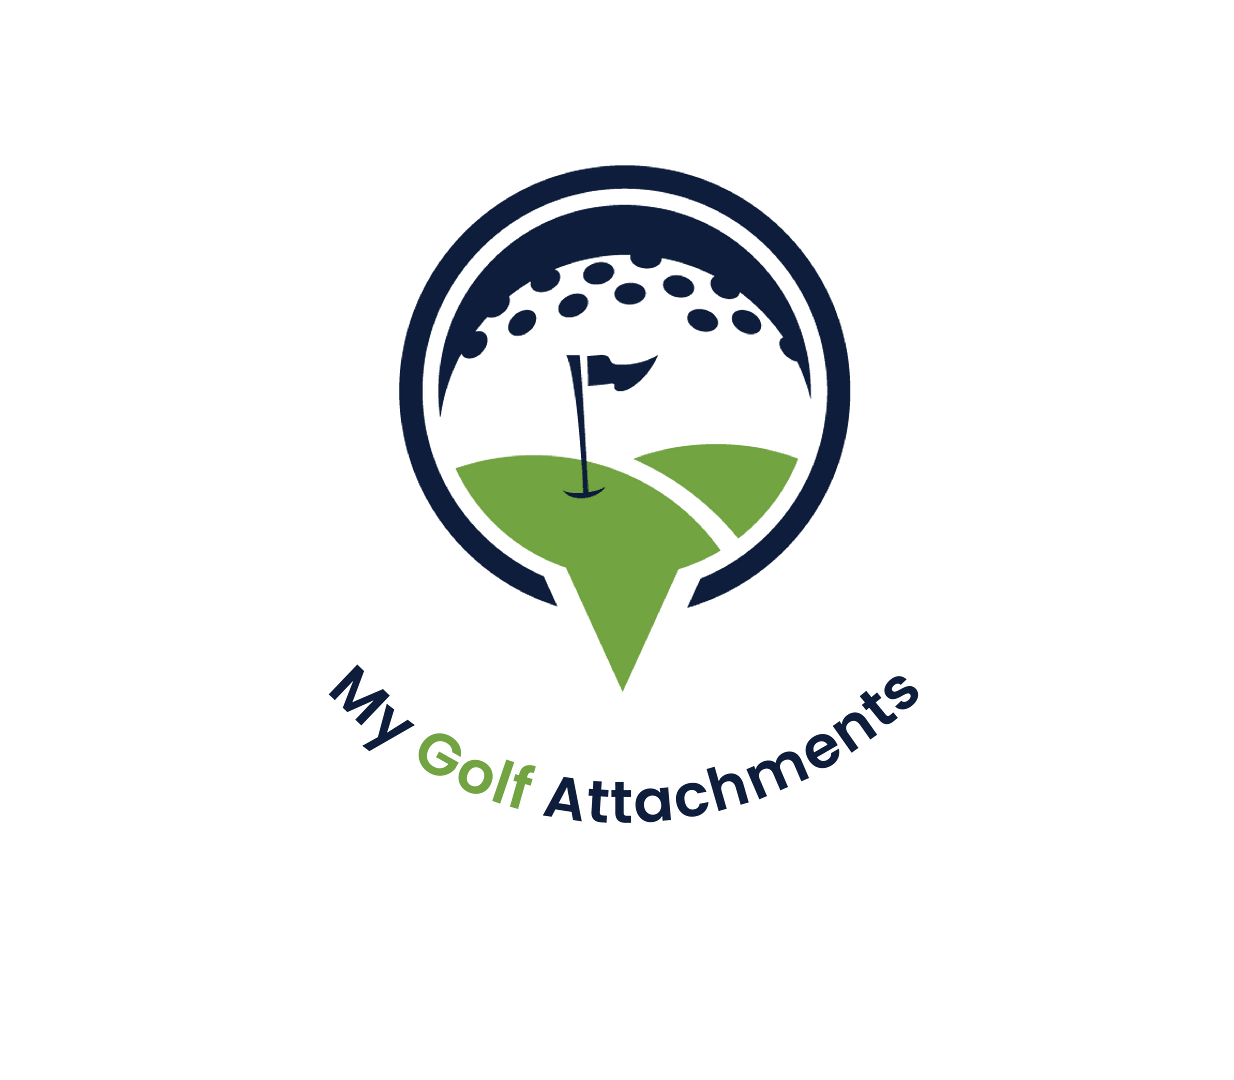 My Golf Attachments logo